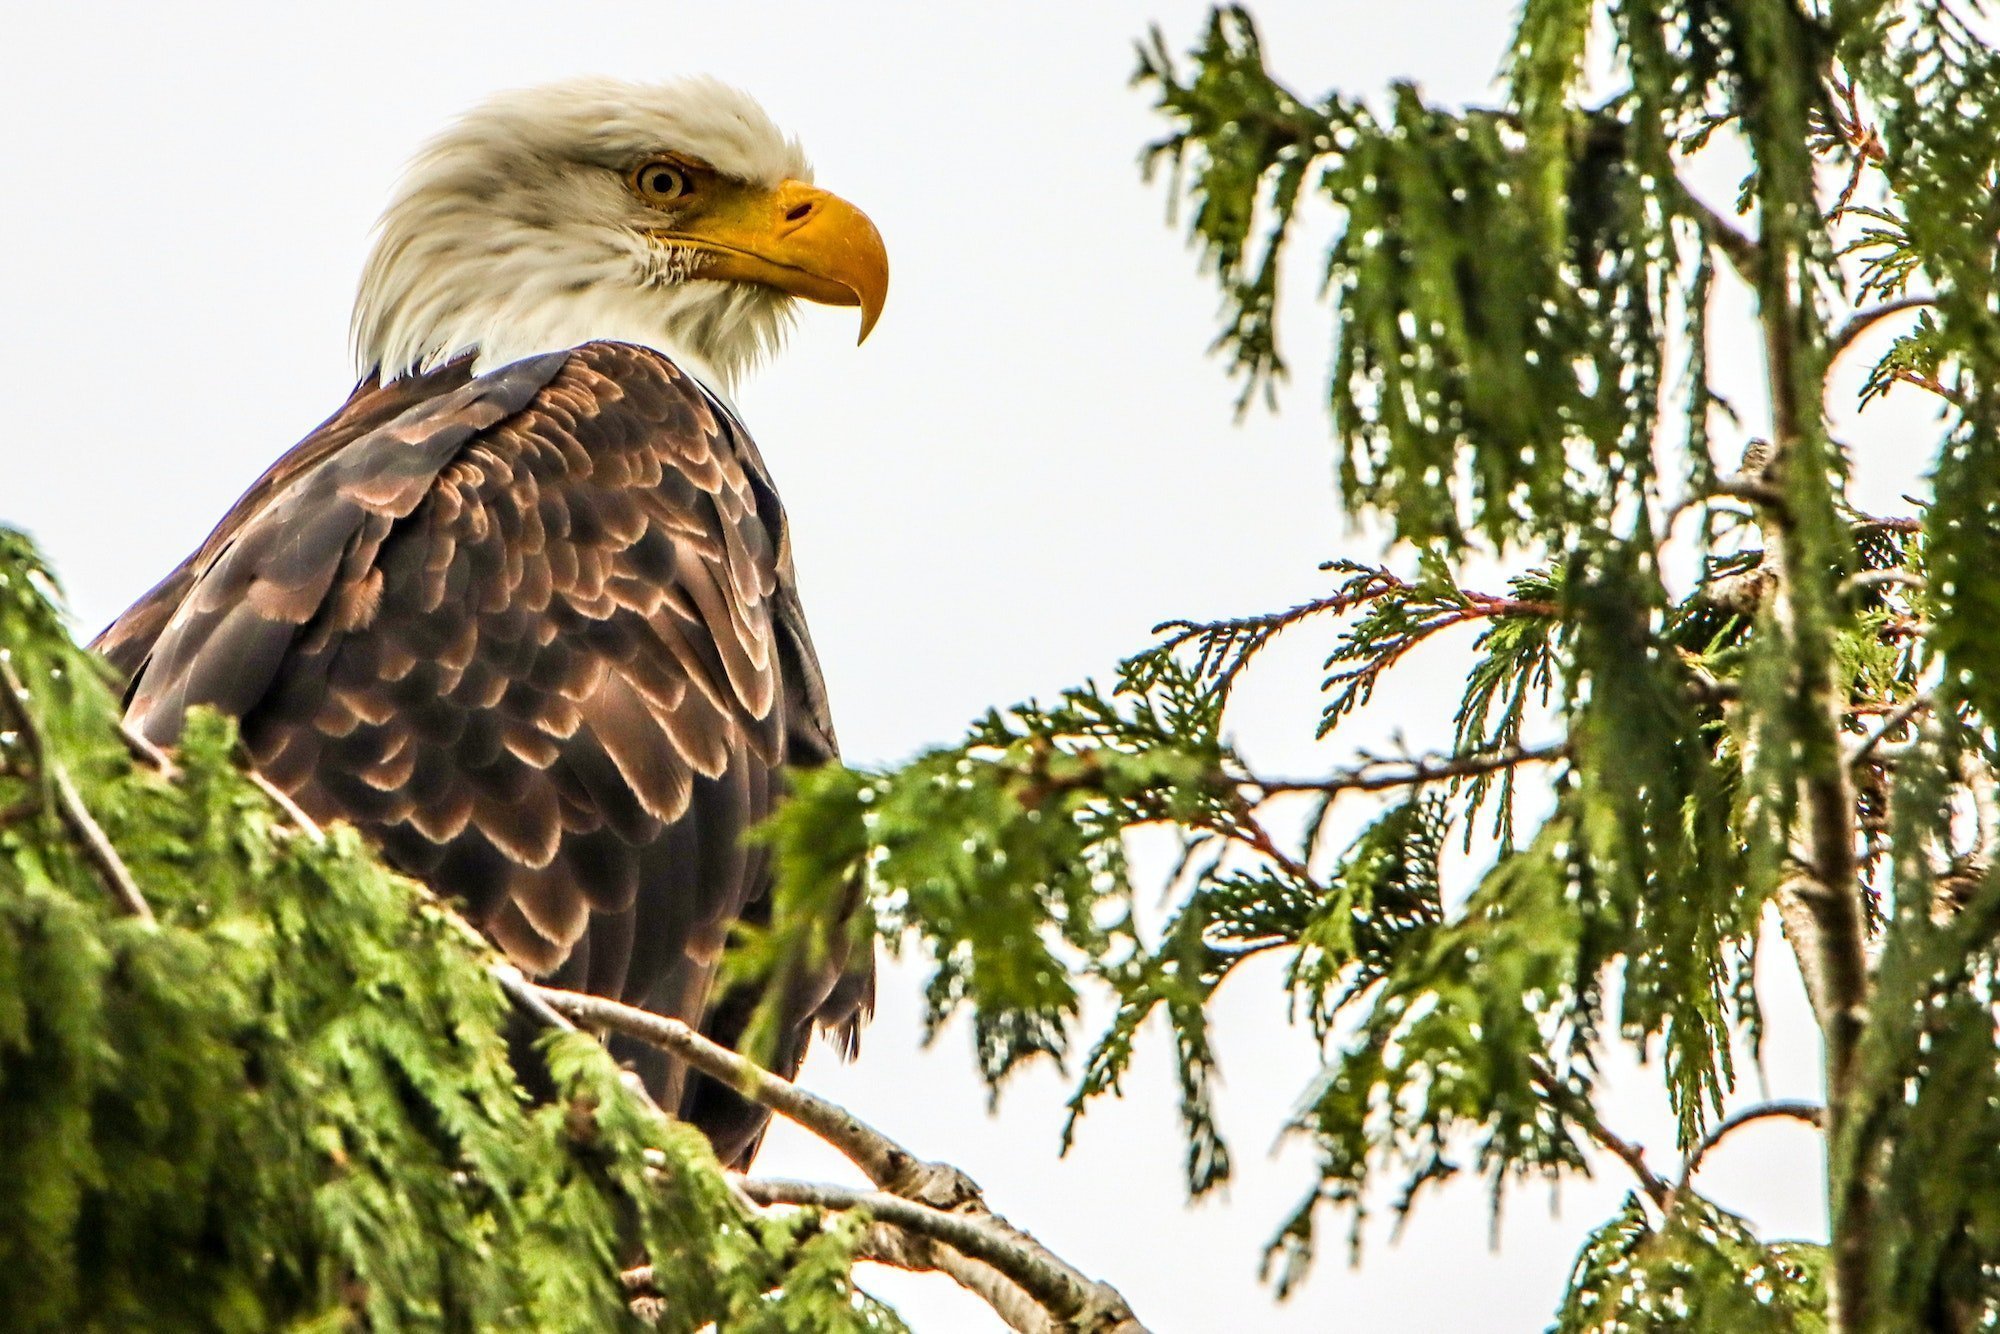 An eagle in a cedar tree